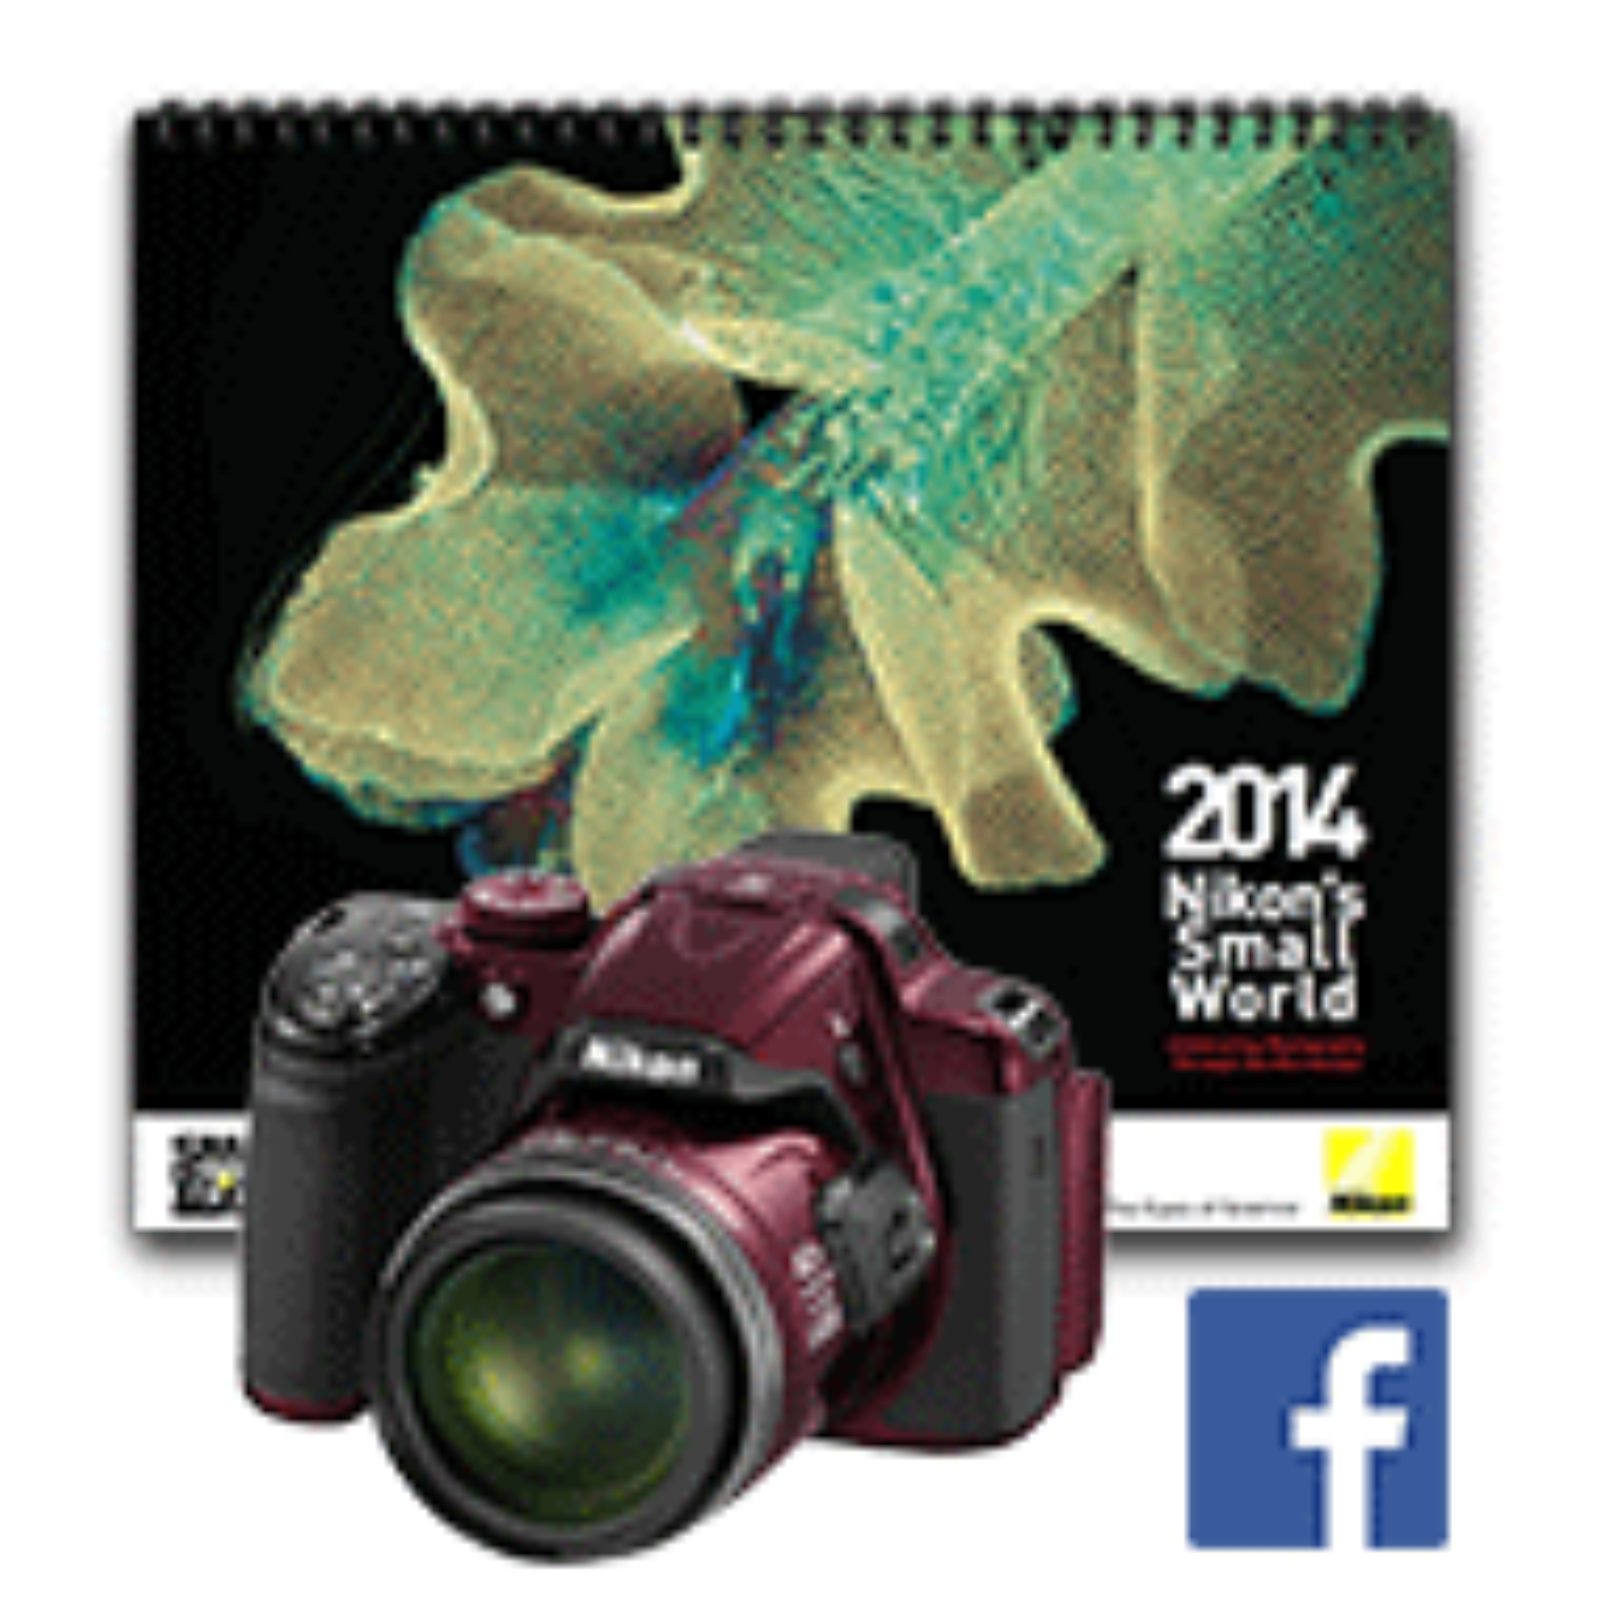 Nikon Instruments Small World Calendar Sweepstakes News Nikon’s